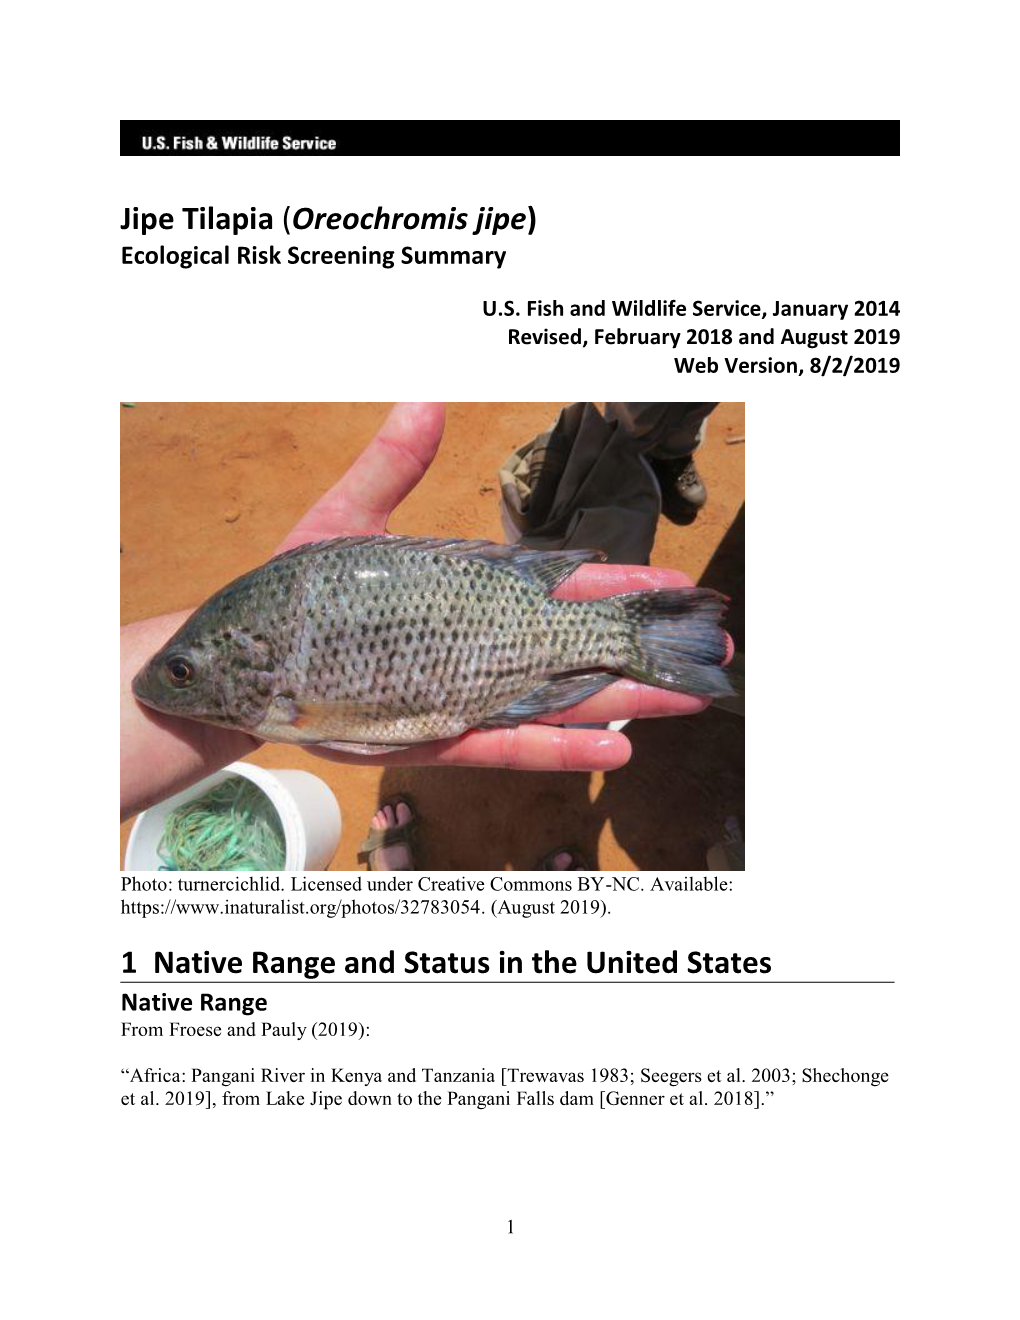 Oreochromis Jipe) Ecological Risk Screening Summary